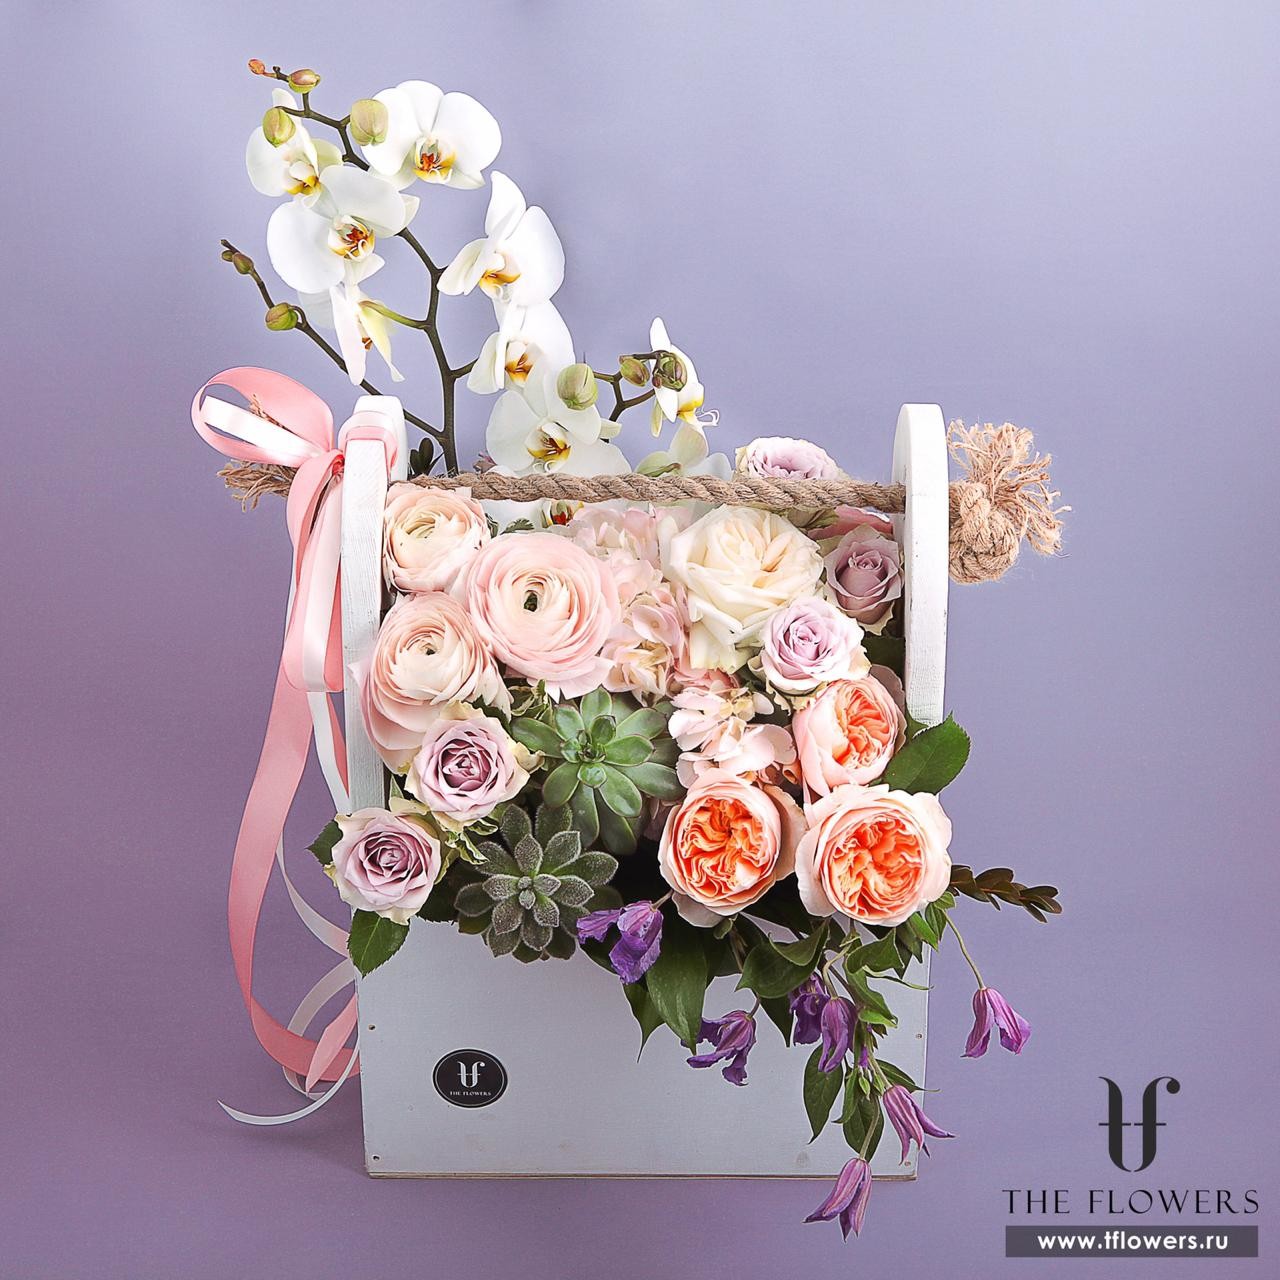 IVORY ANTIQUE Flowers arrangement in a box